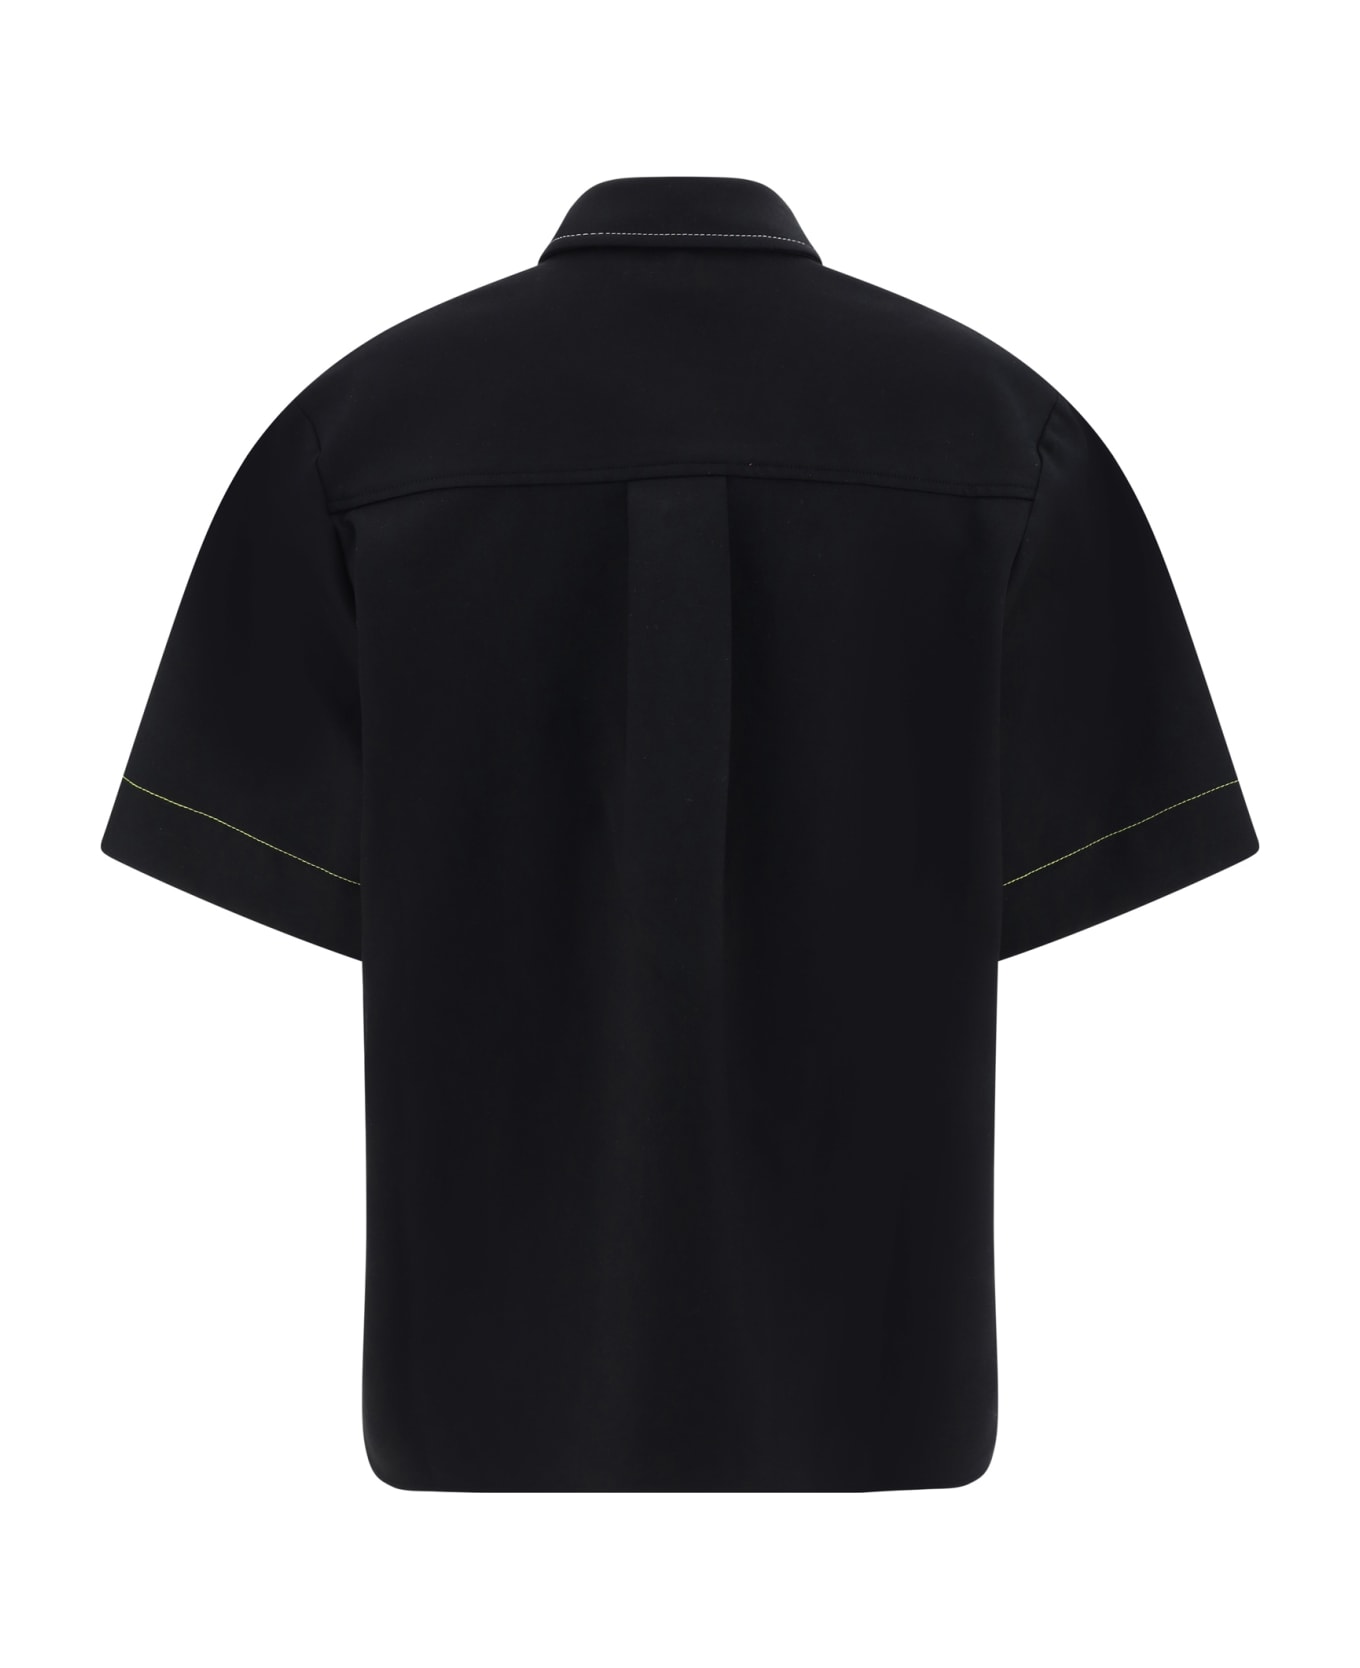 Victoria Beckham Polo Shirt - Black